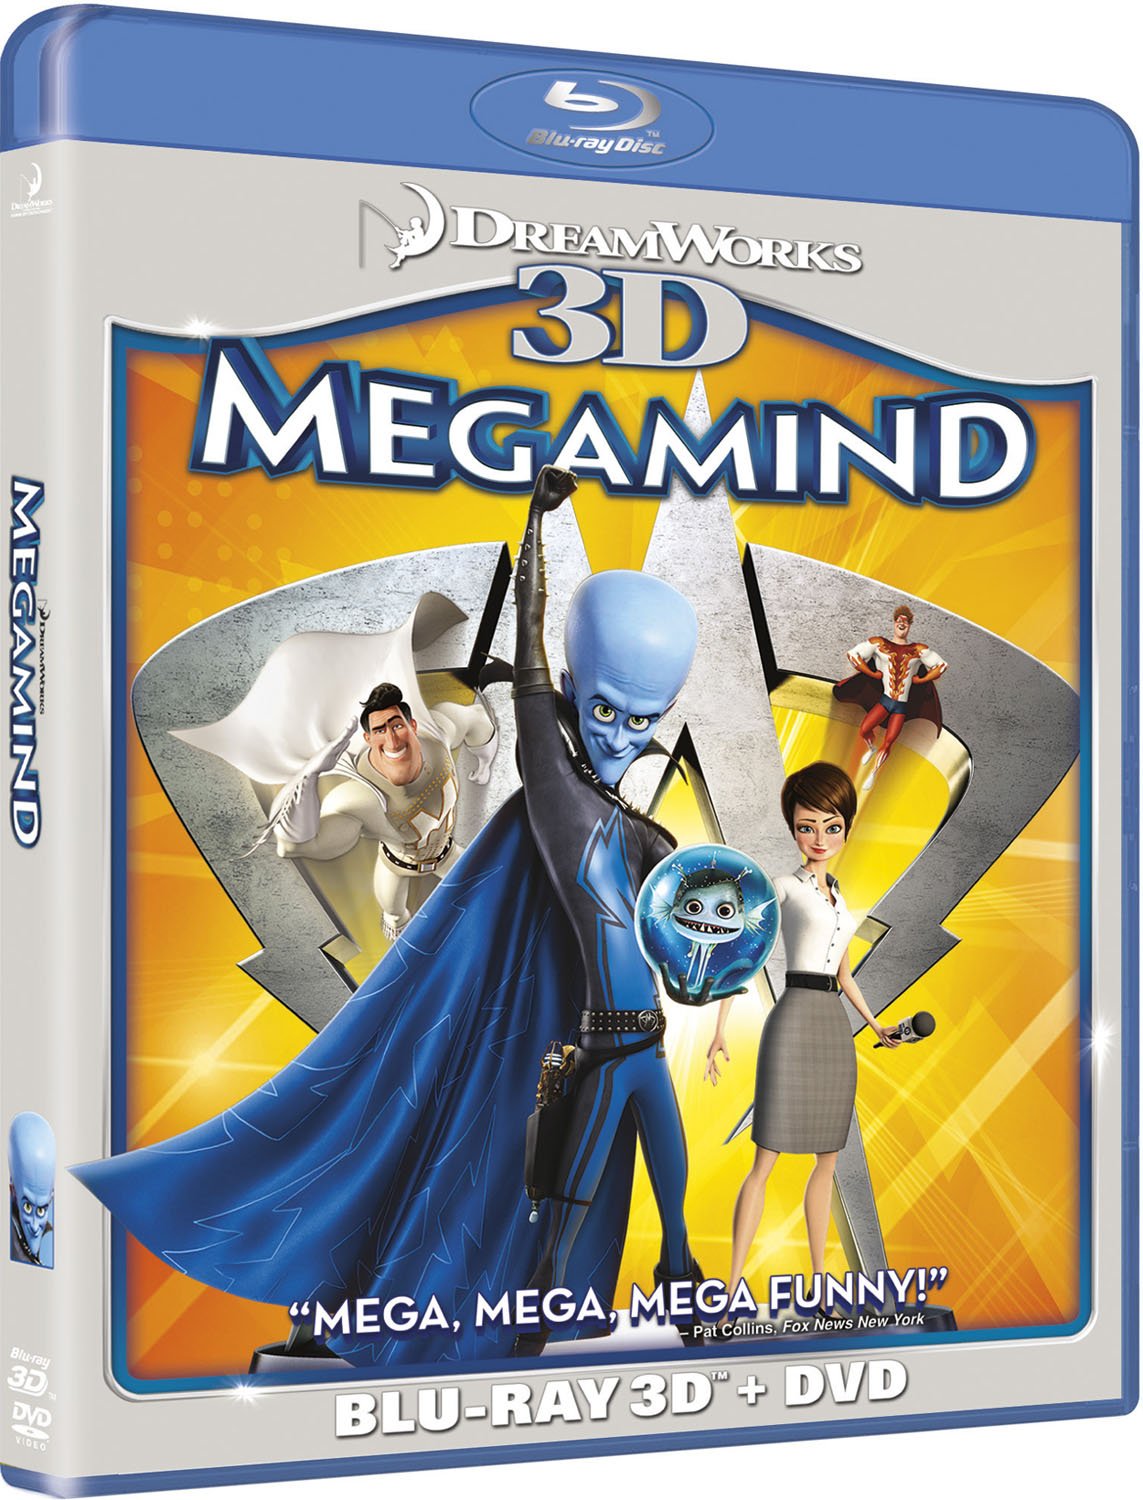 Megamind Blu-ray 3D + DVD